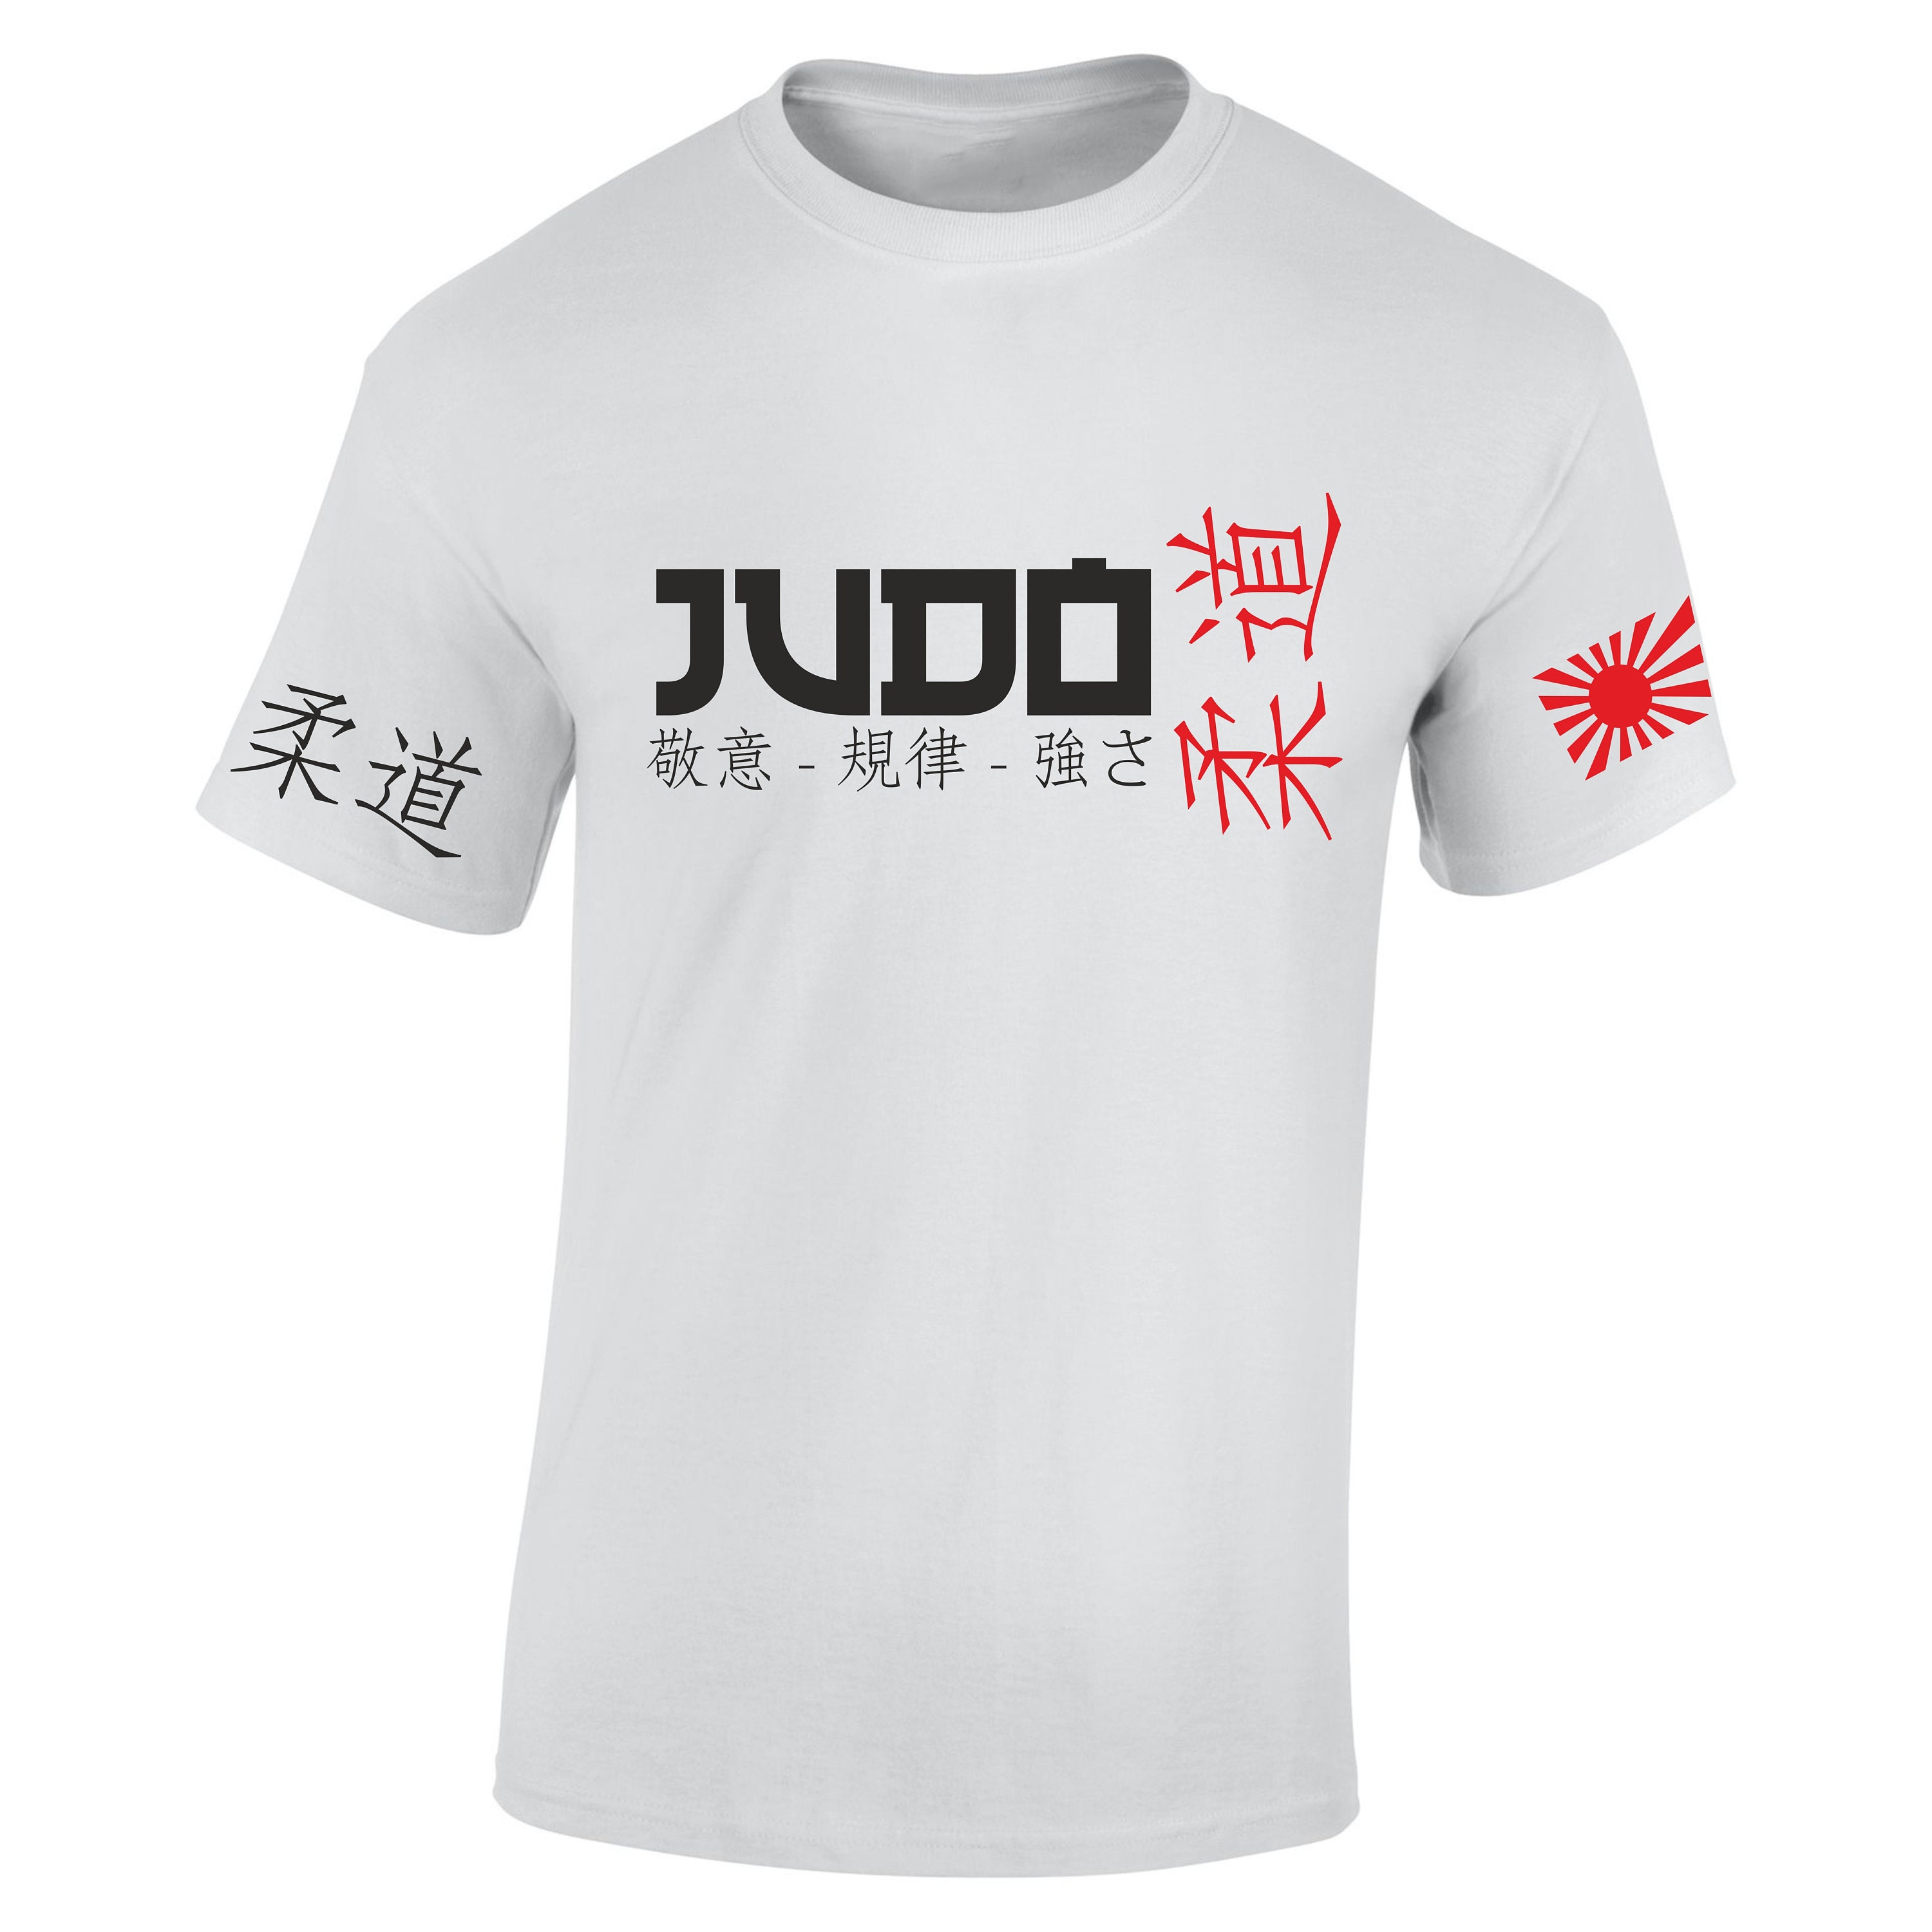 MartialArtsStyle Martial Arts Shirt, MMA Legends T-Shirt, Boxing Shirt, BJJ Shirt, MMA Shirt, Fighter Shirt, Men T Shirt, White / M